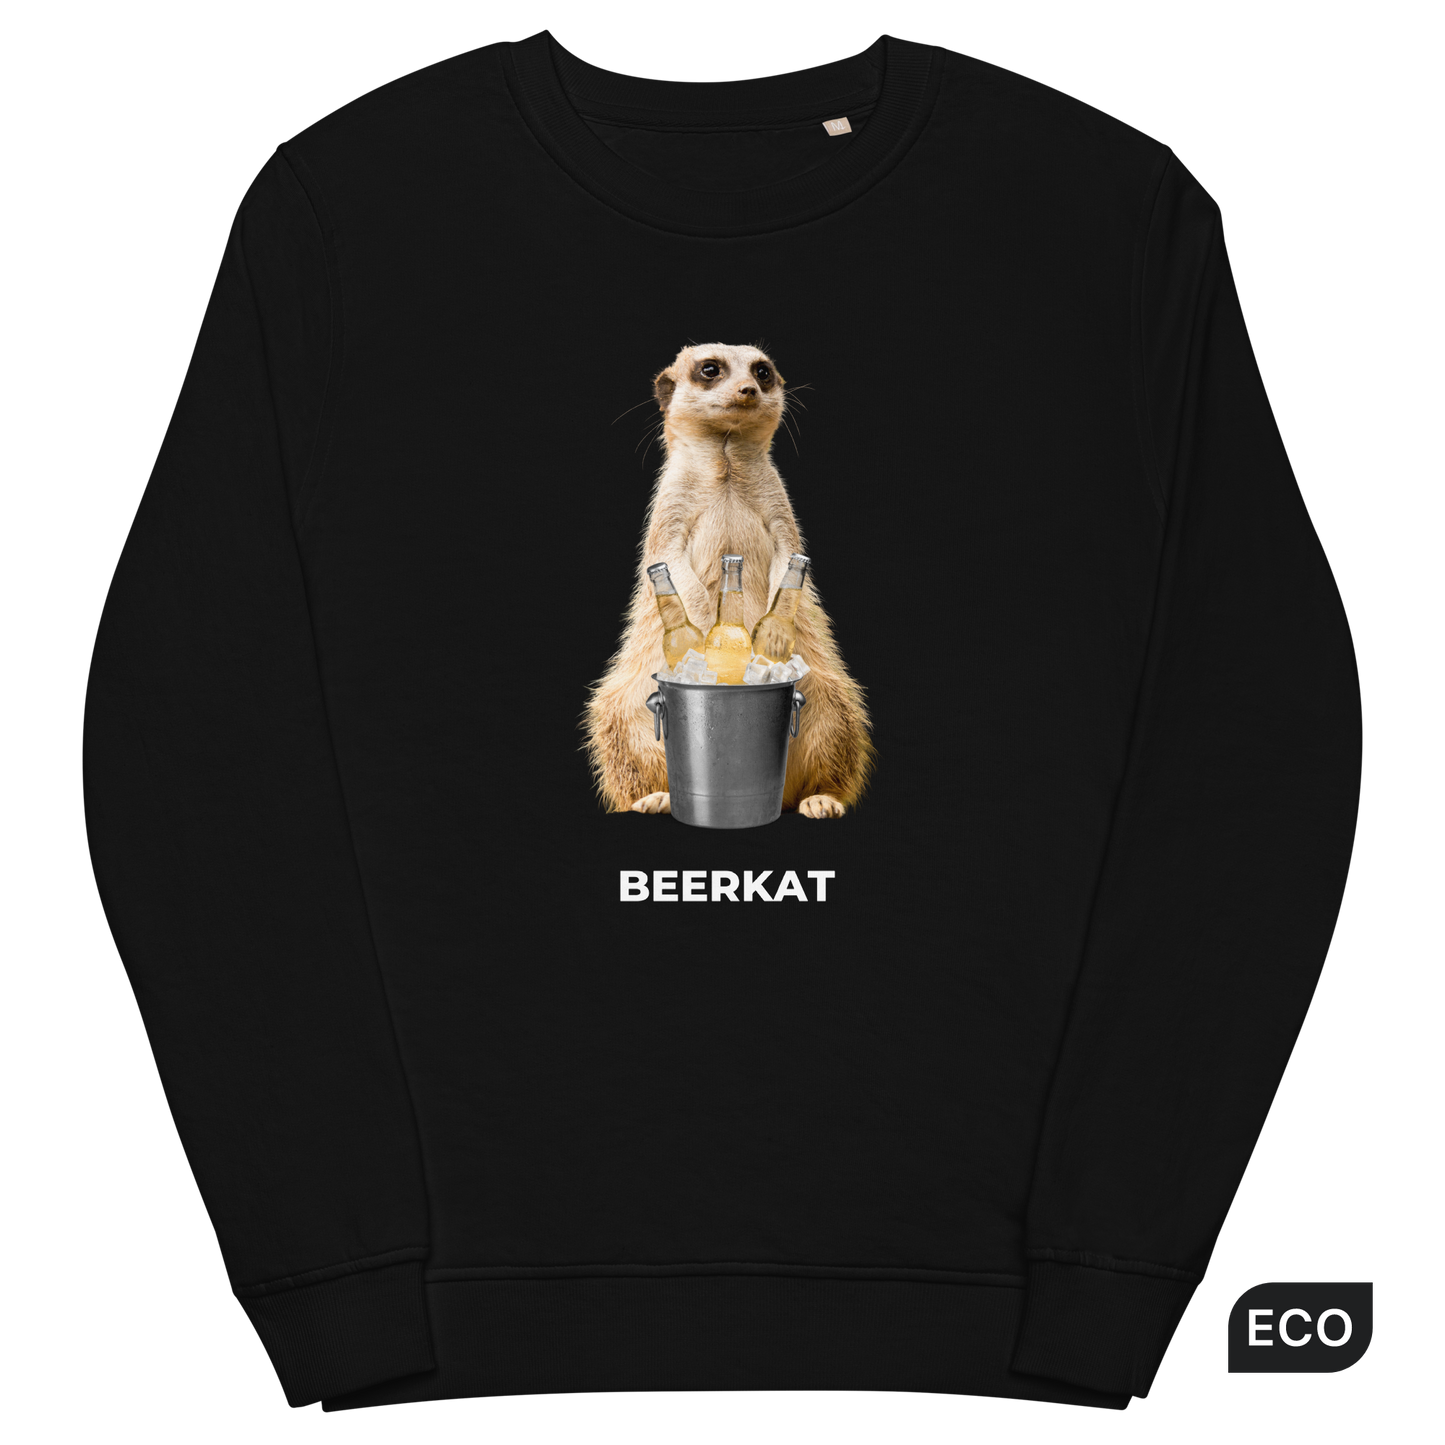 Black Organic Cotton Meerkat Sweatshirt featuring a hilarious Beerkat graphic on the chest - Funny Graphic Meerkat Sweatshirts - Boozy Fox